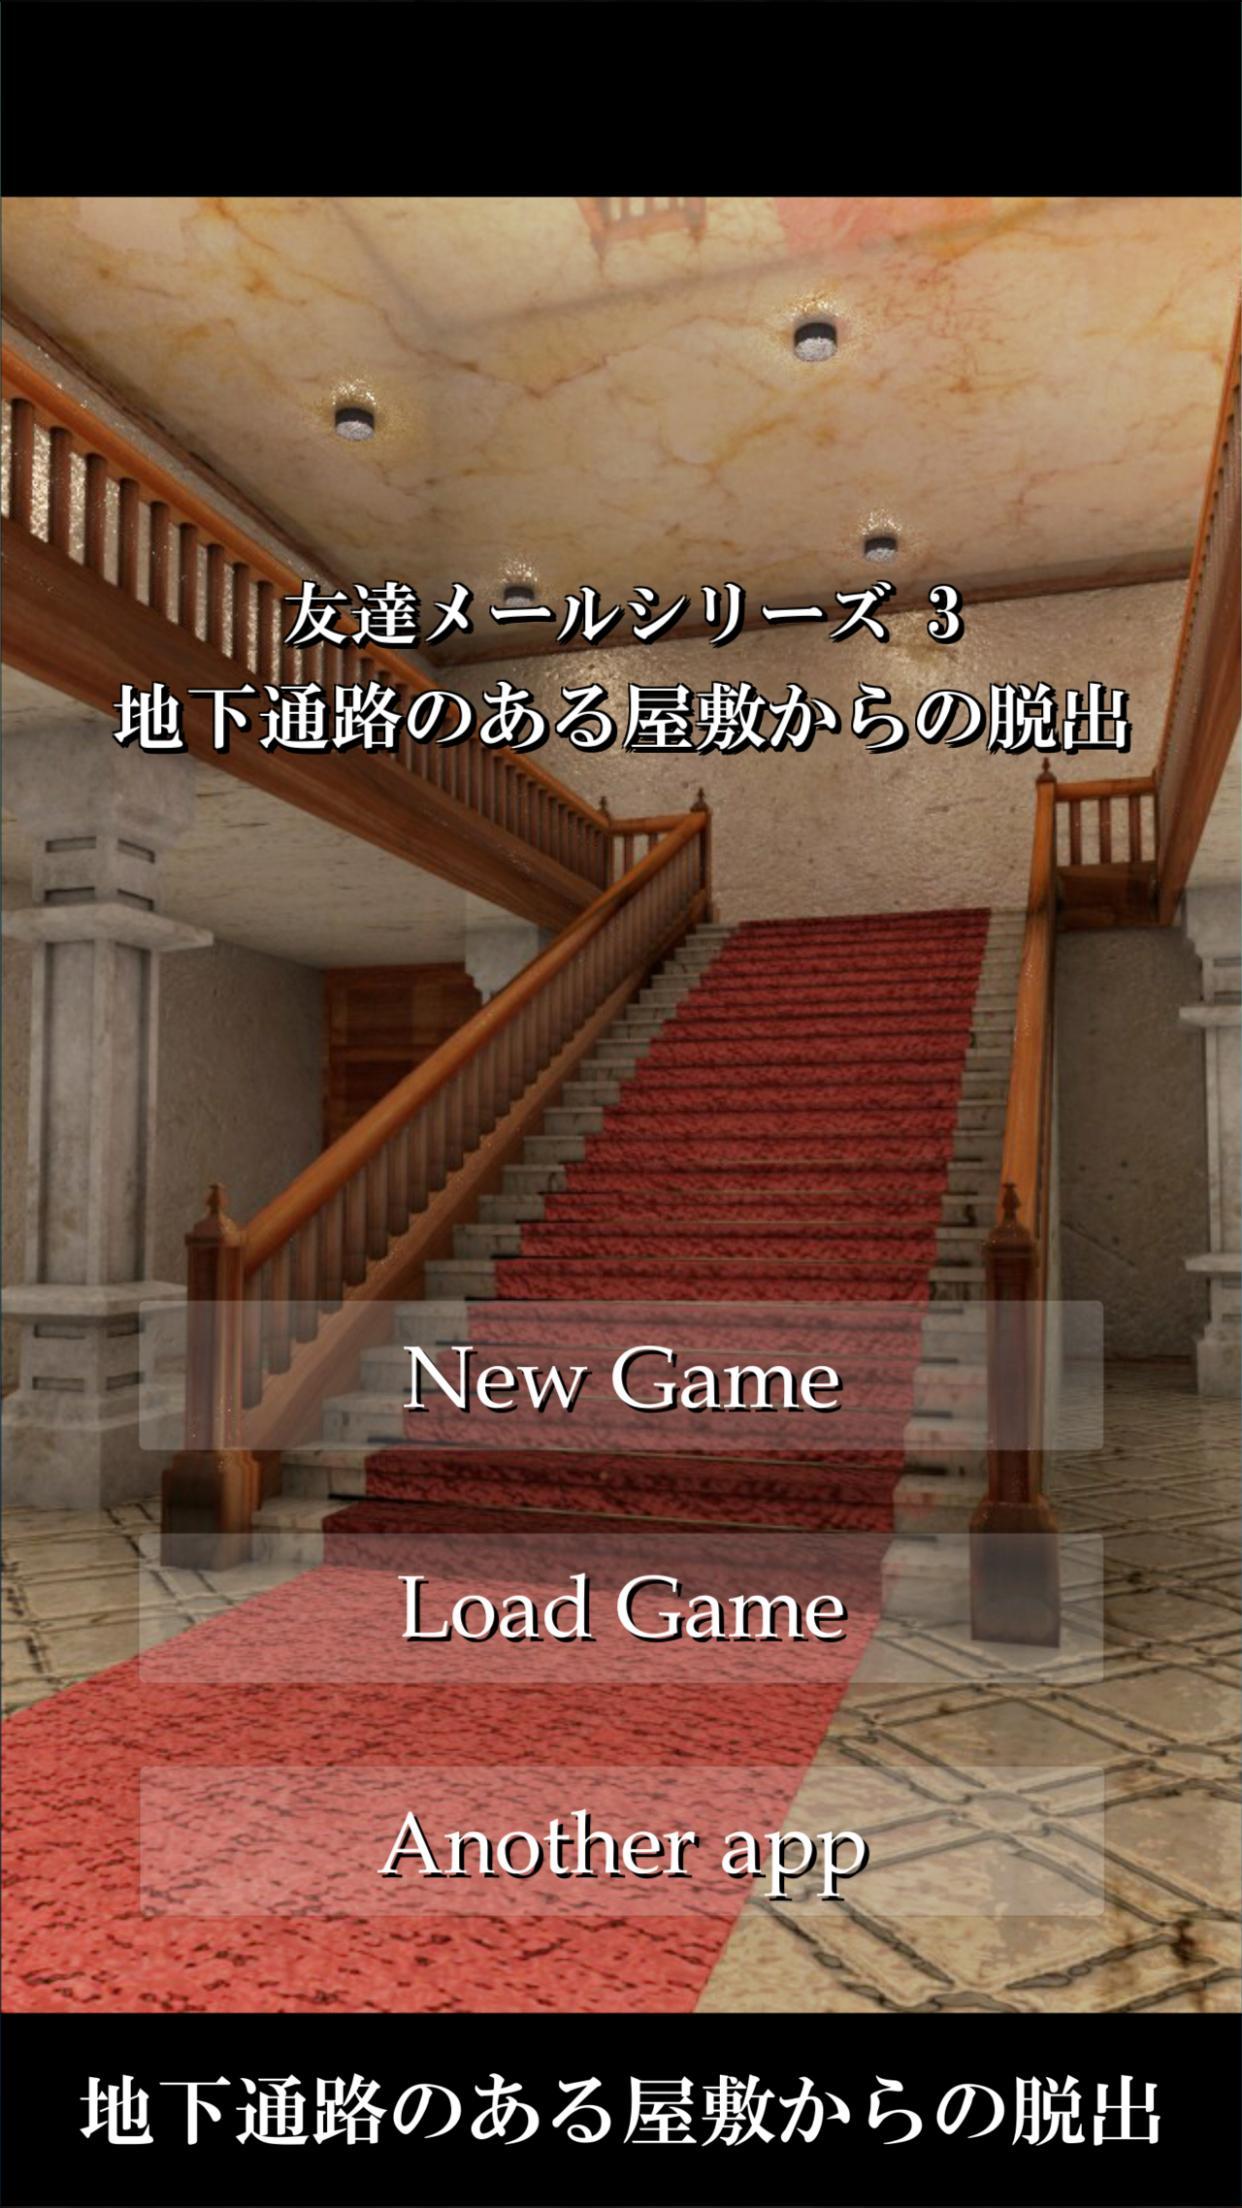 Screenshot 1 of Игра Побег Побег из особняка с подземным ходом 